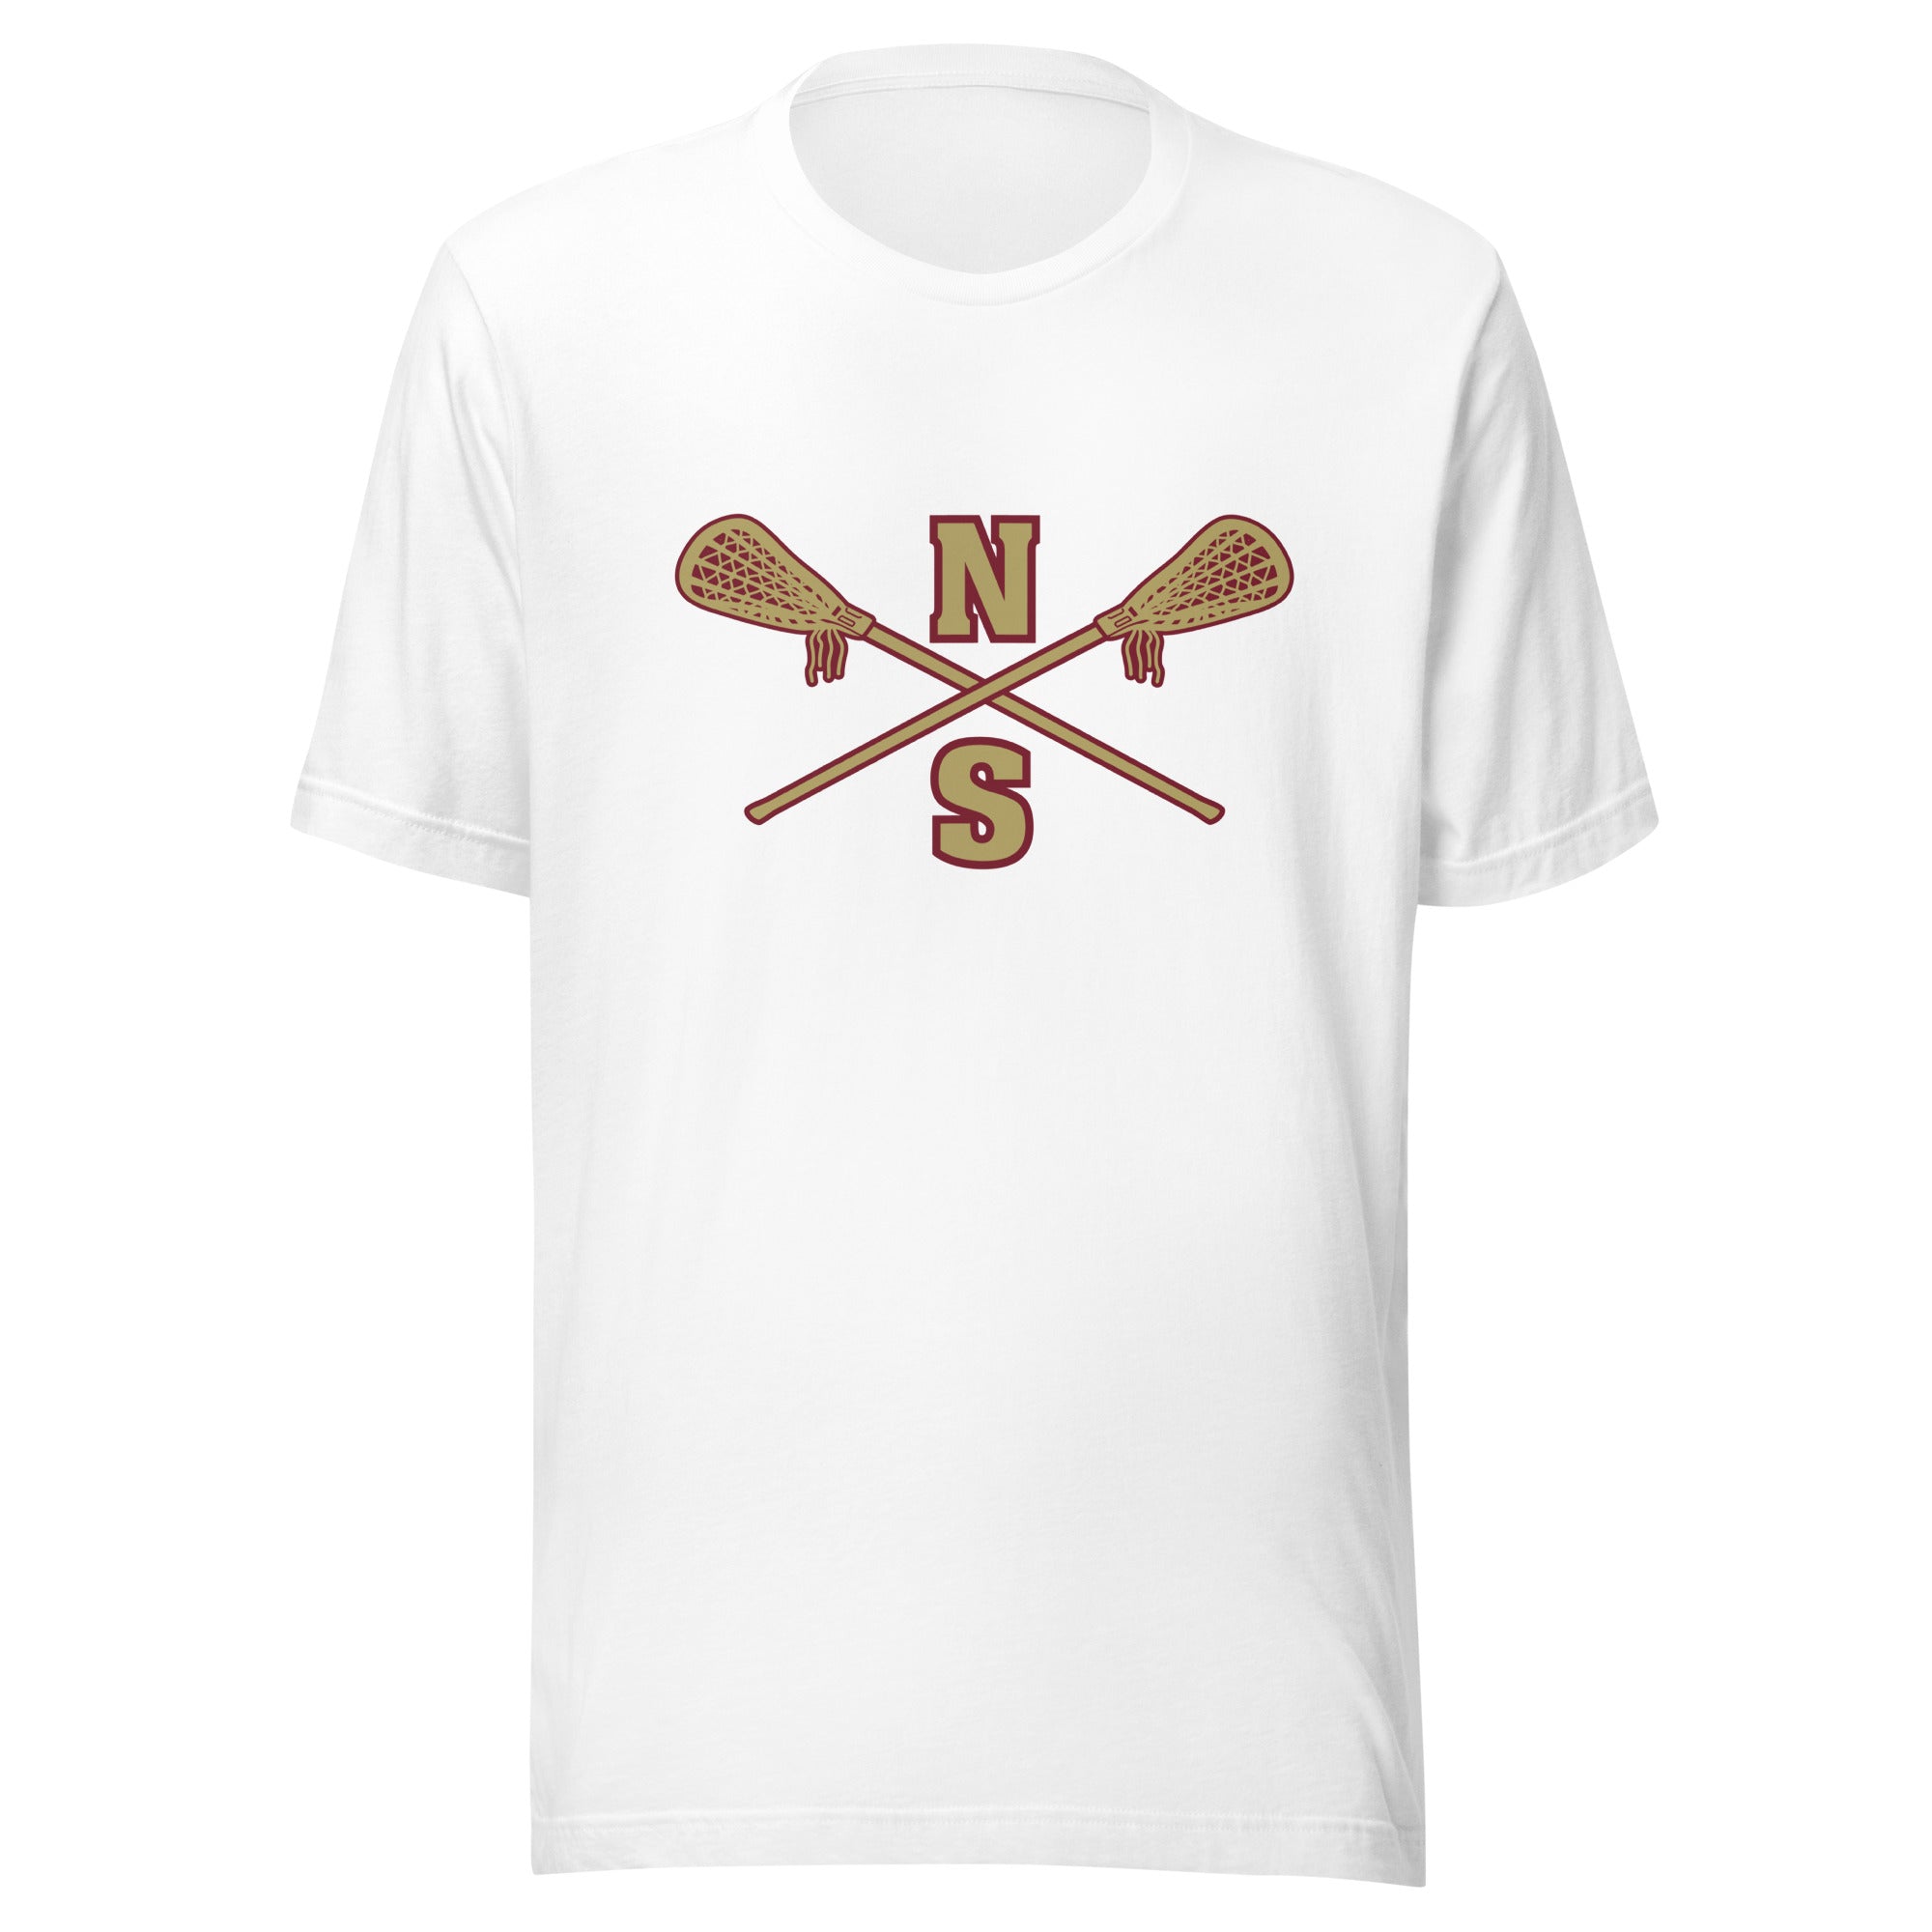 N-S Unisex t-shirt (Boys Logo)